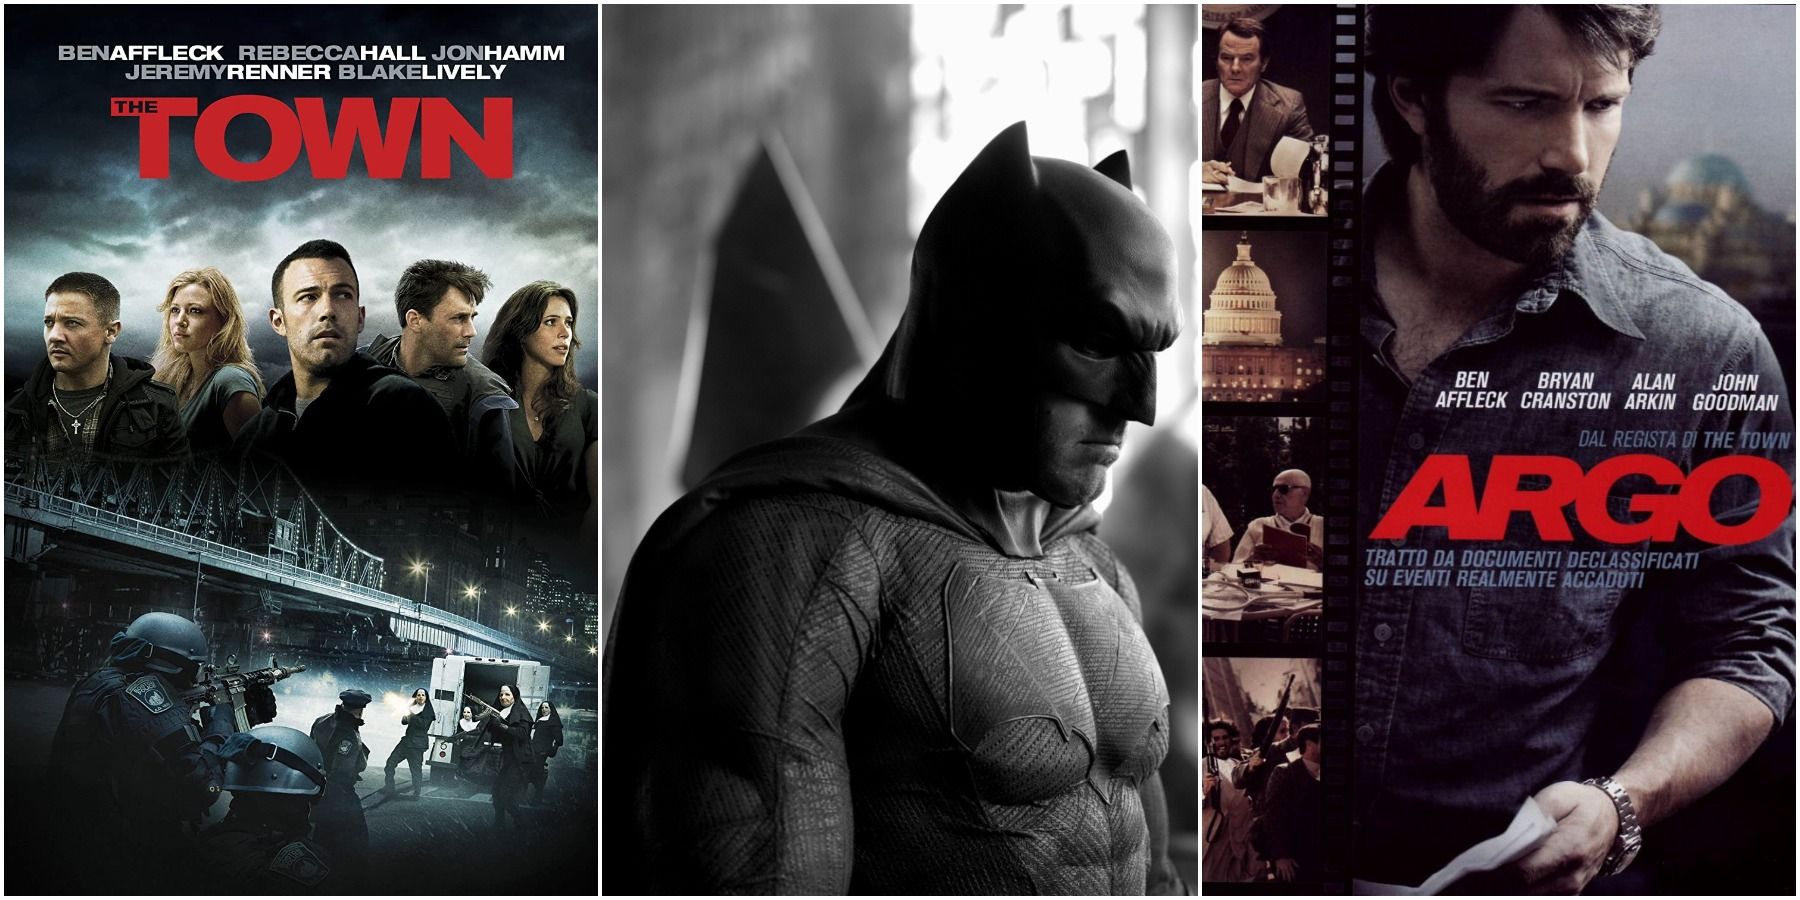 Ben Affleck's The Town, Argo, and an early shot of him as Batman for Batman v Superman